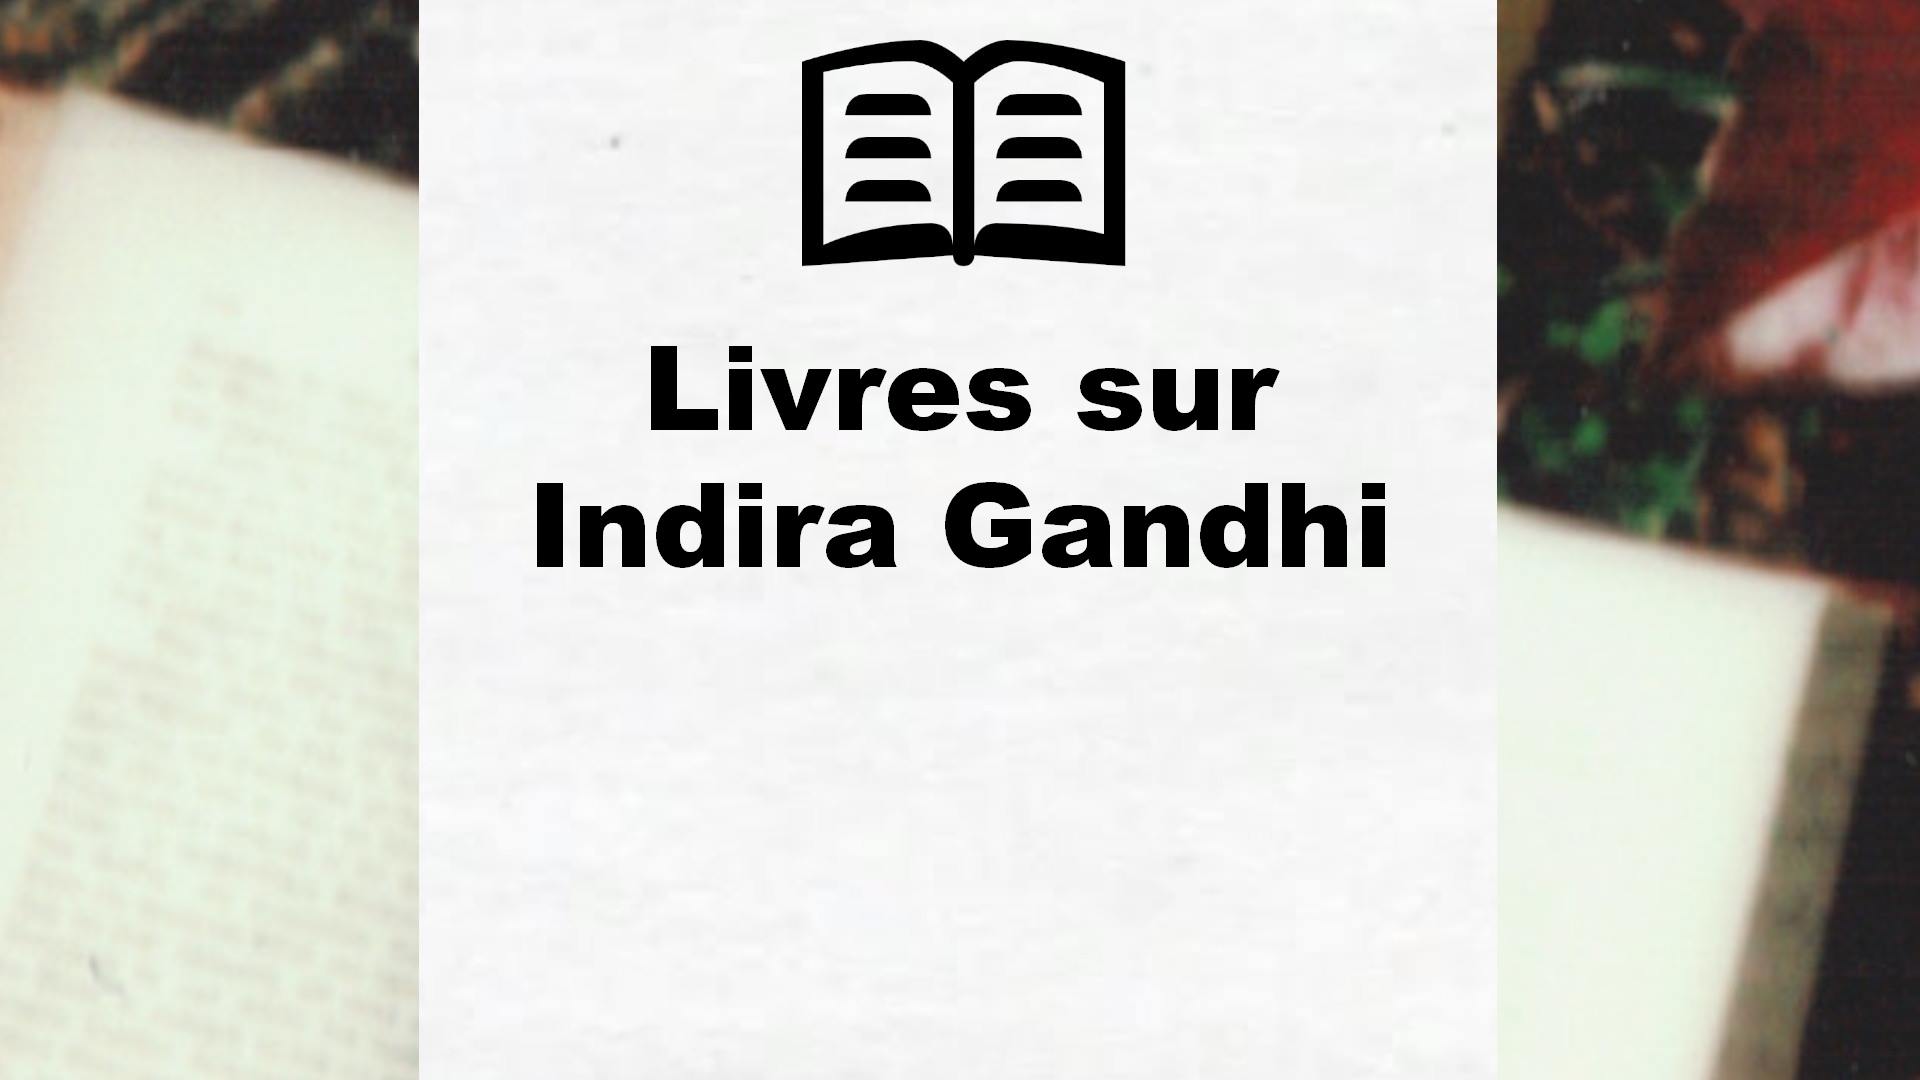 Livres sur Indira Gandhi